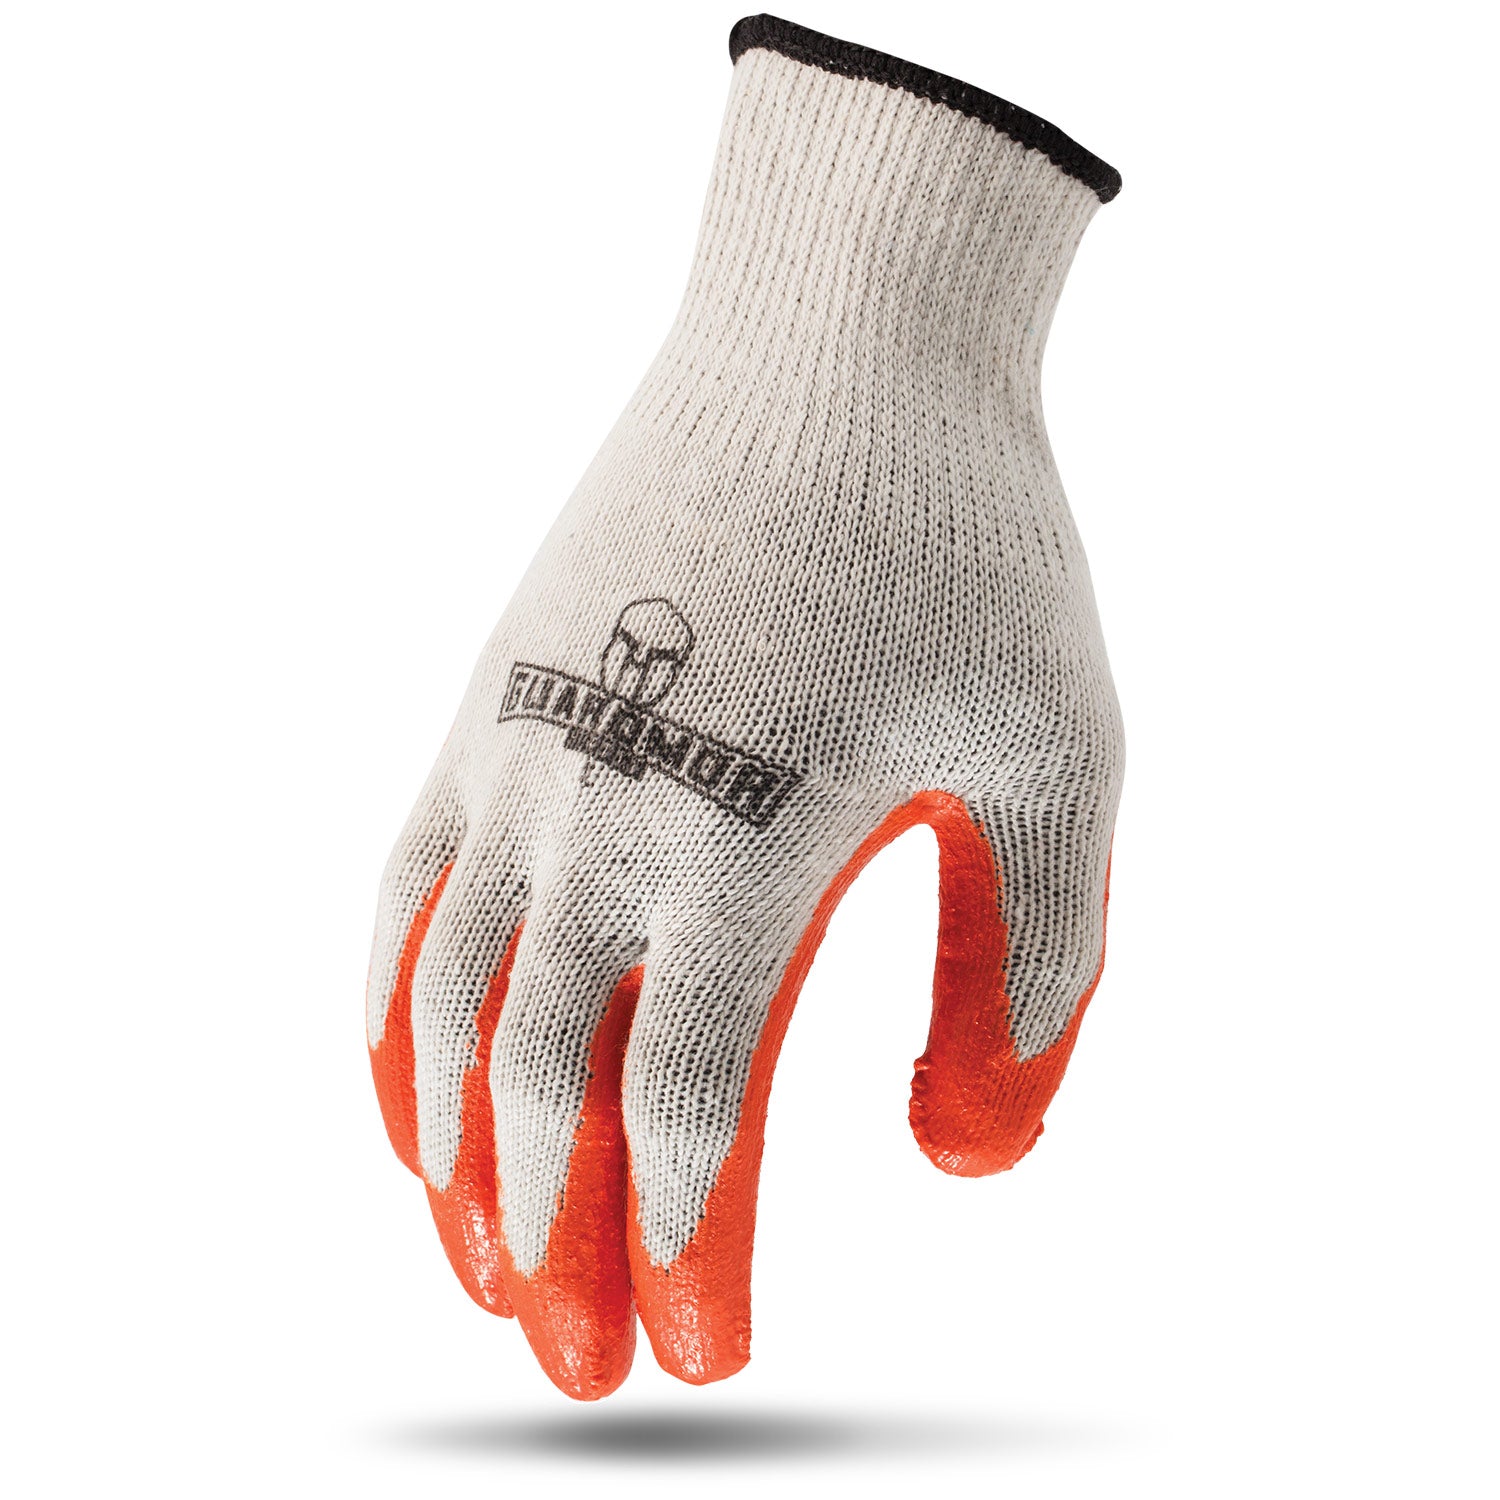 LIFT Safety - Latex Palm Glove